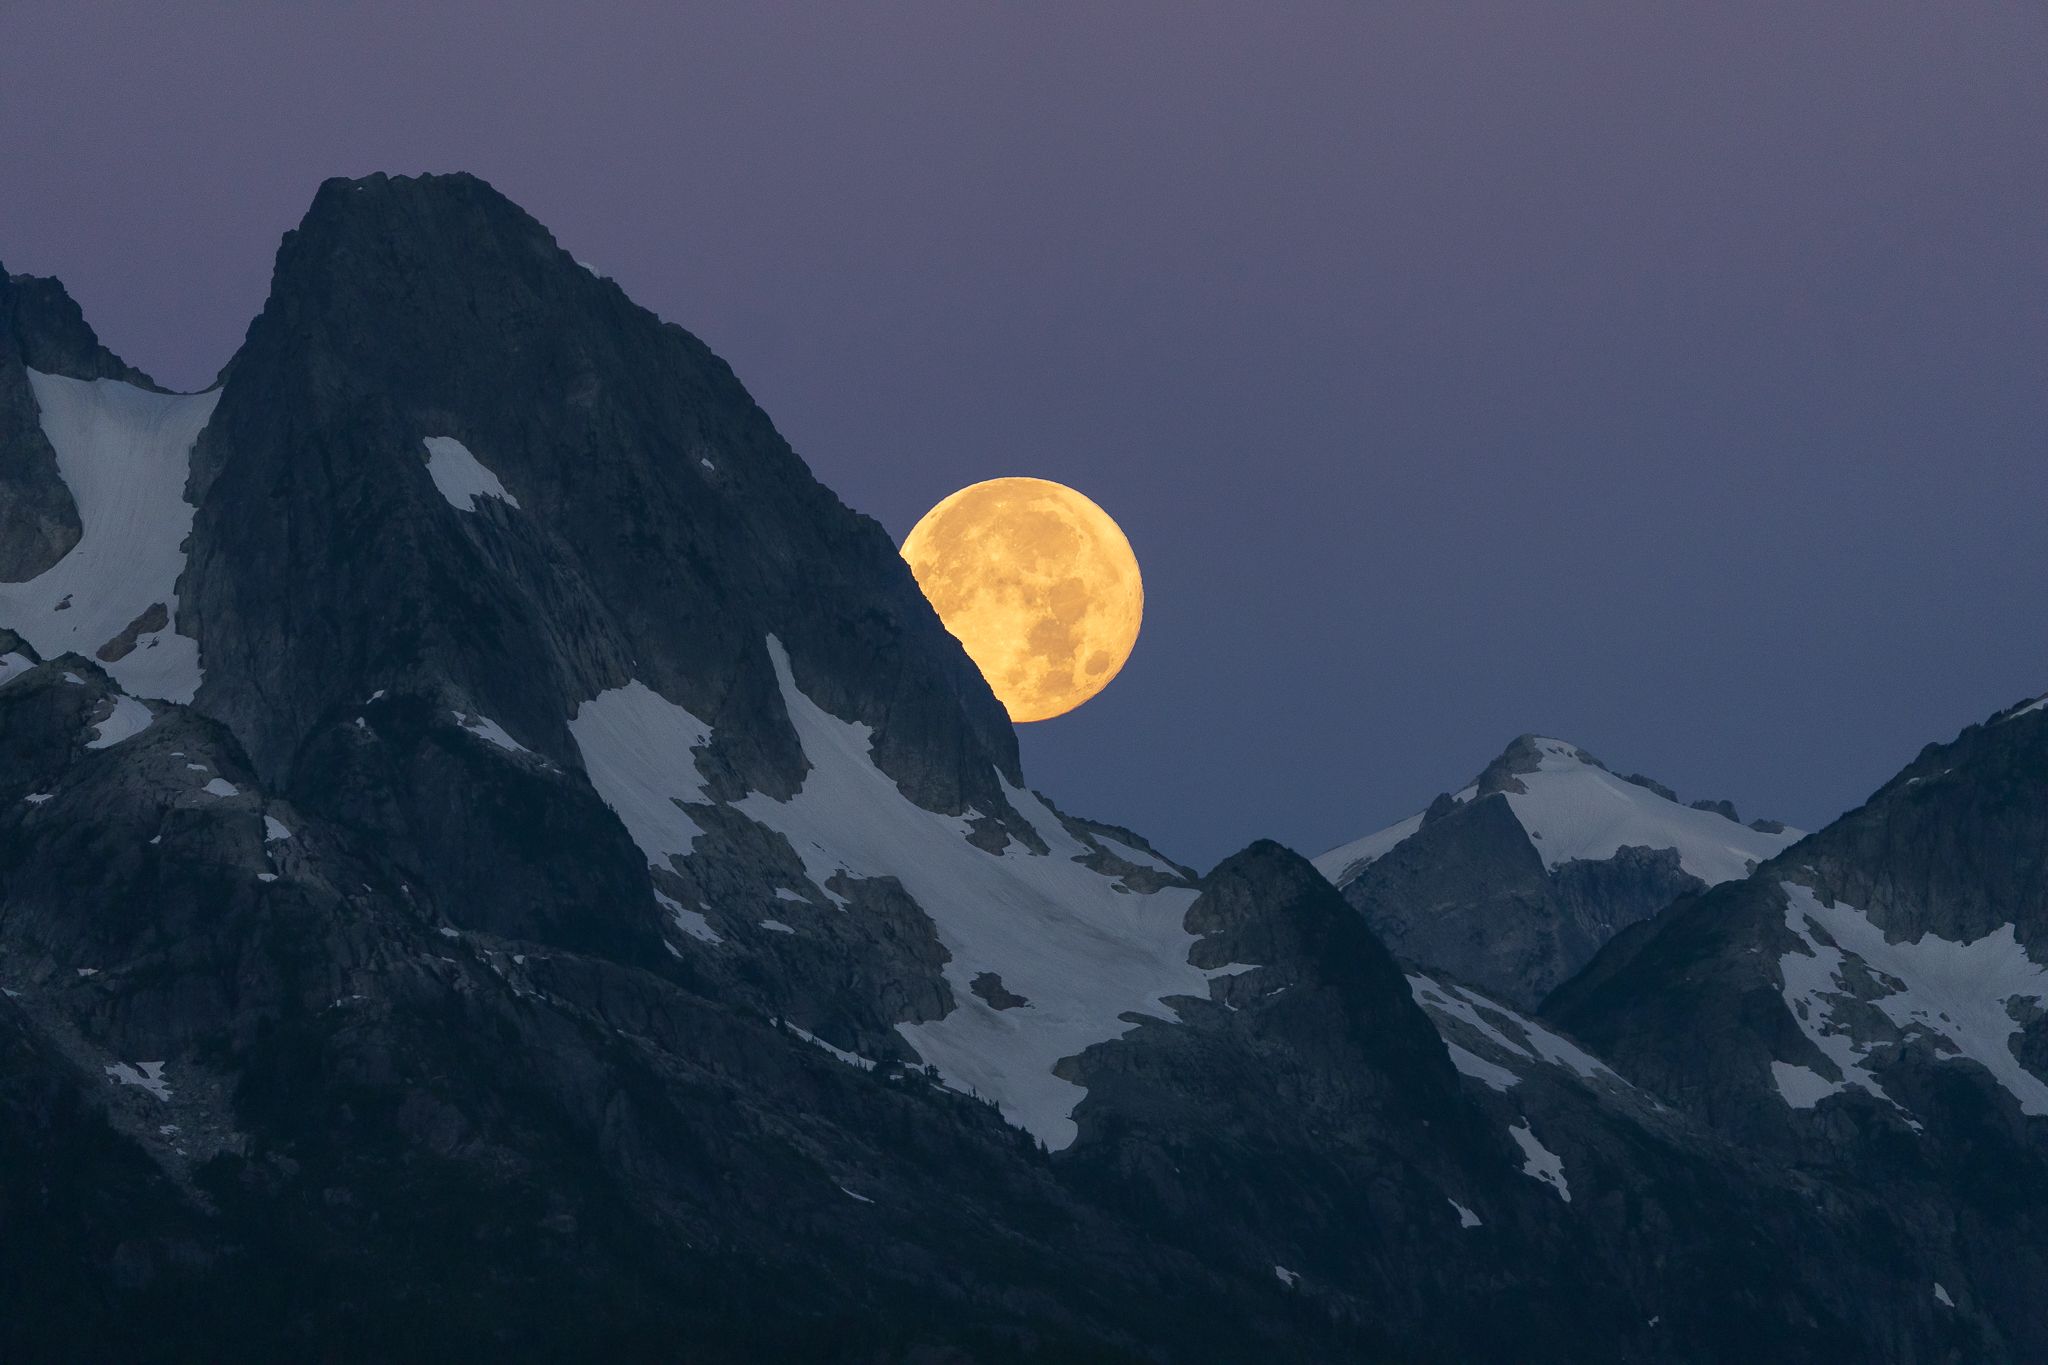 Moon setting in the Tantalus Range